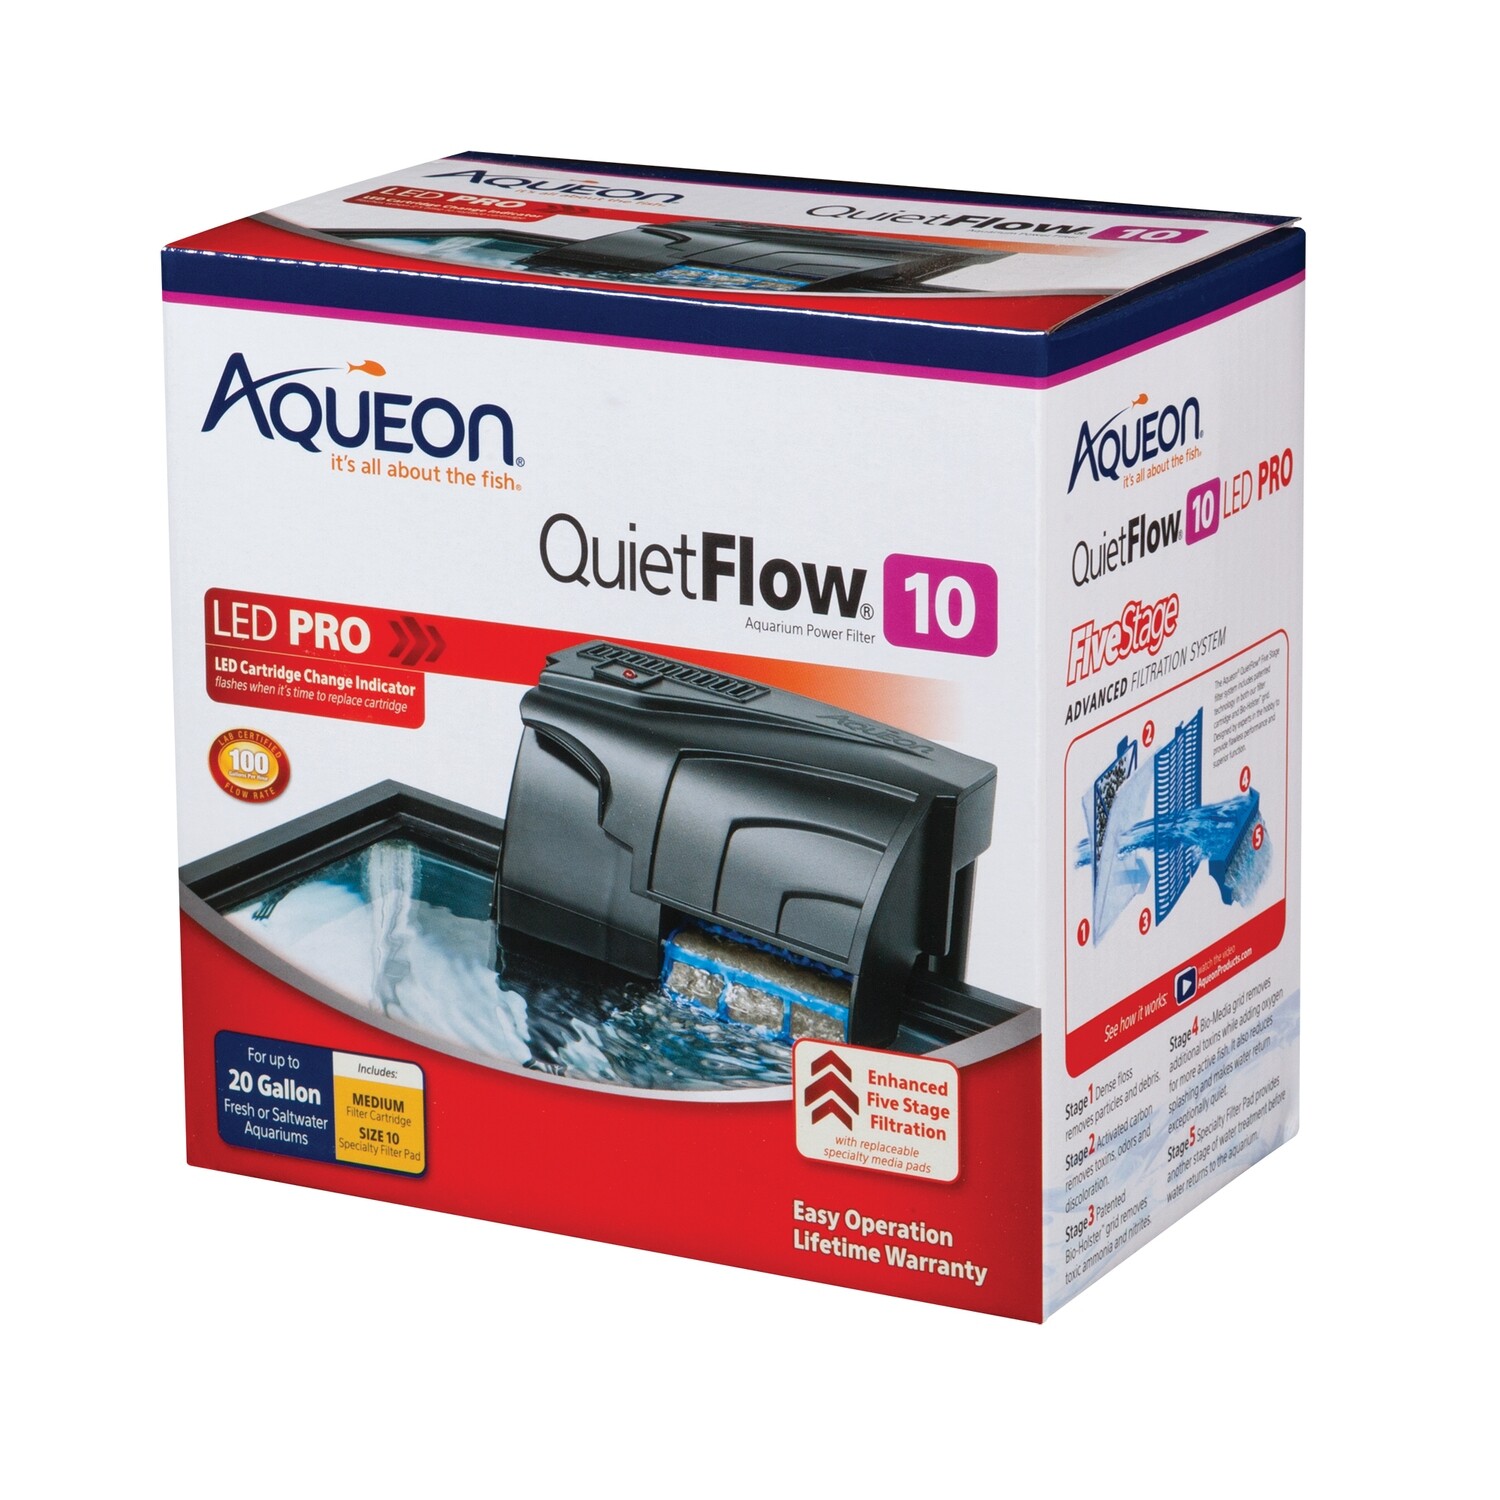 Aqueon QuietFlow LED Pro 10 Power Filter